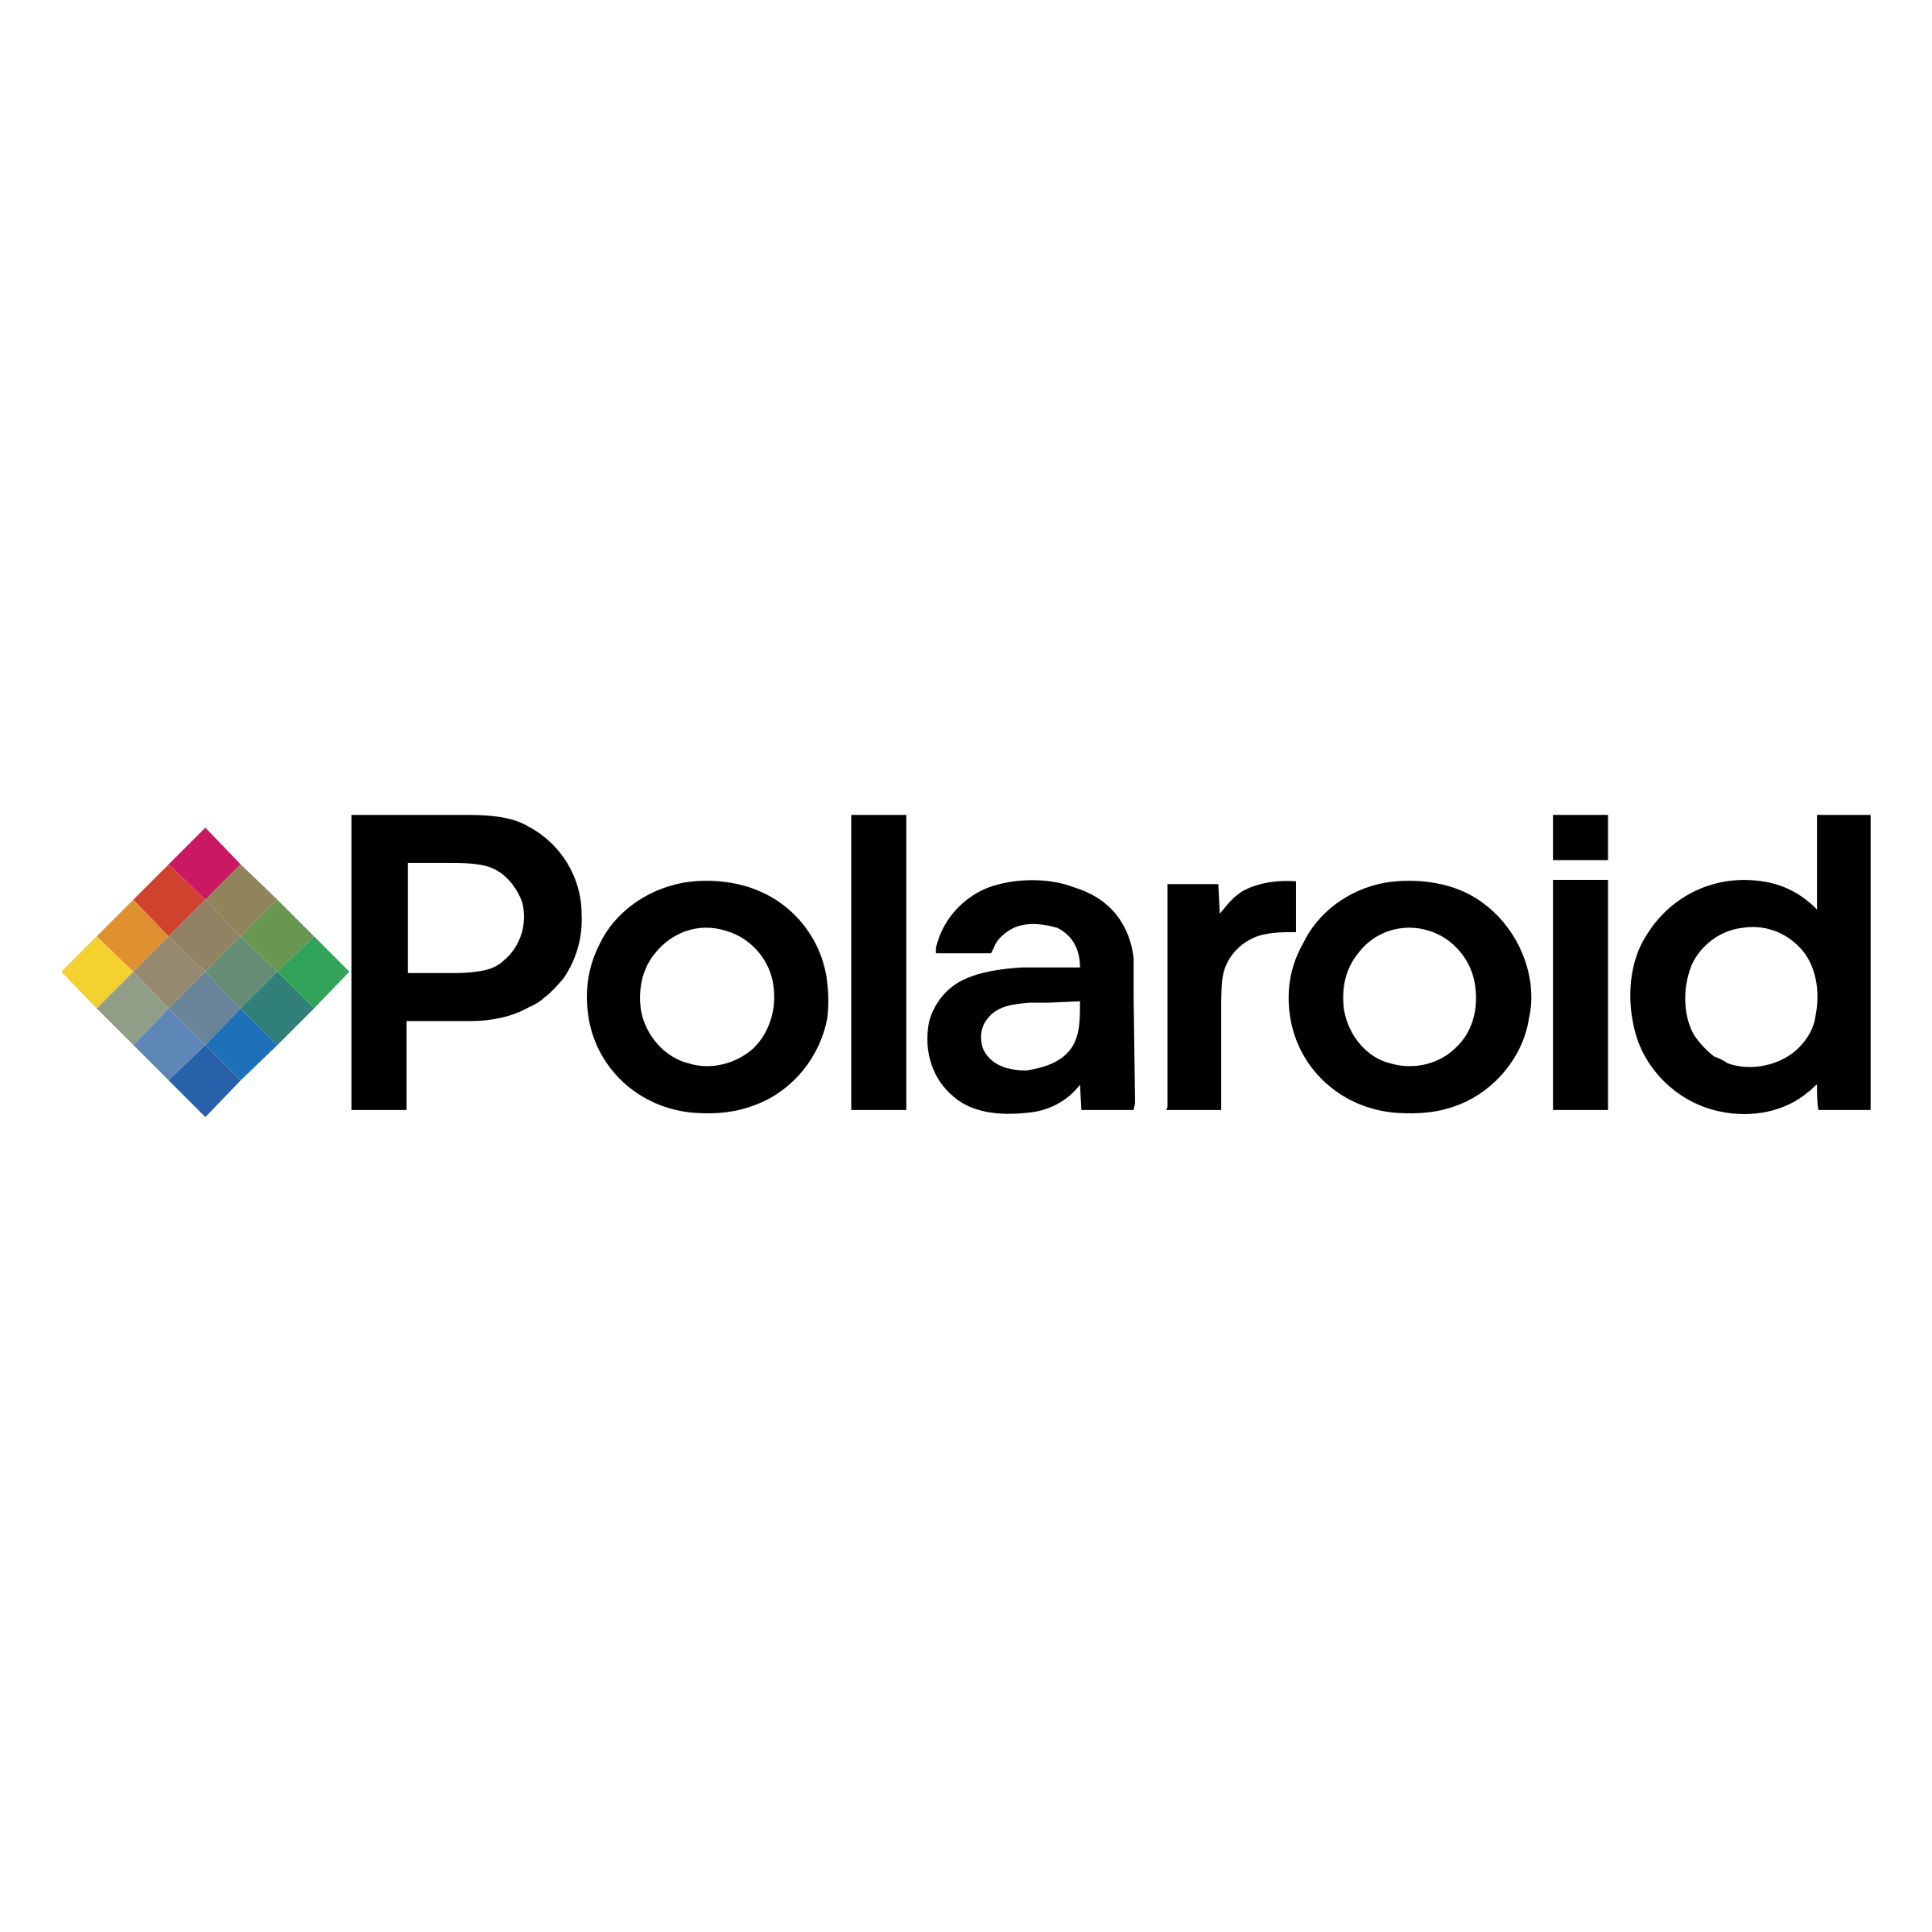 Polaroid Logo - Polaroid Logo PNG Transparent & SVG Vector - Freebie Supply